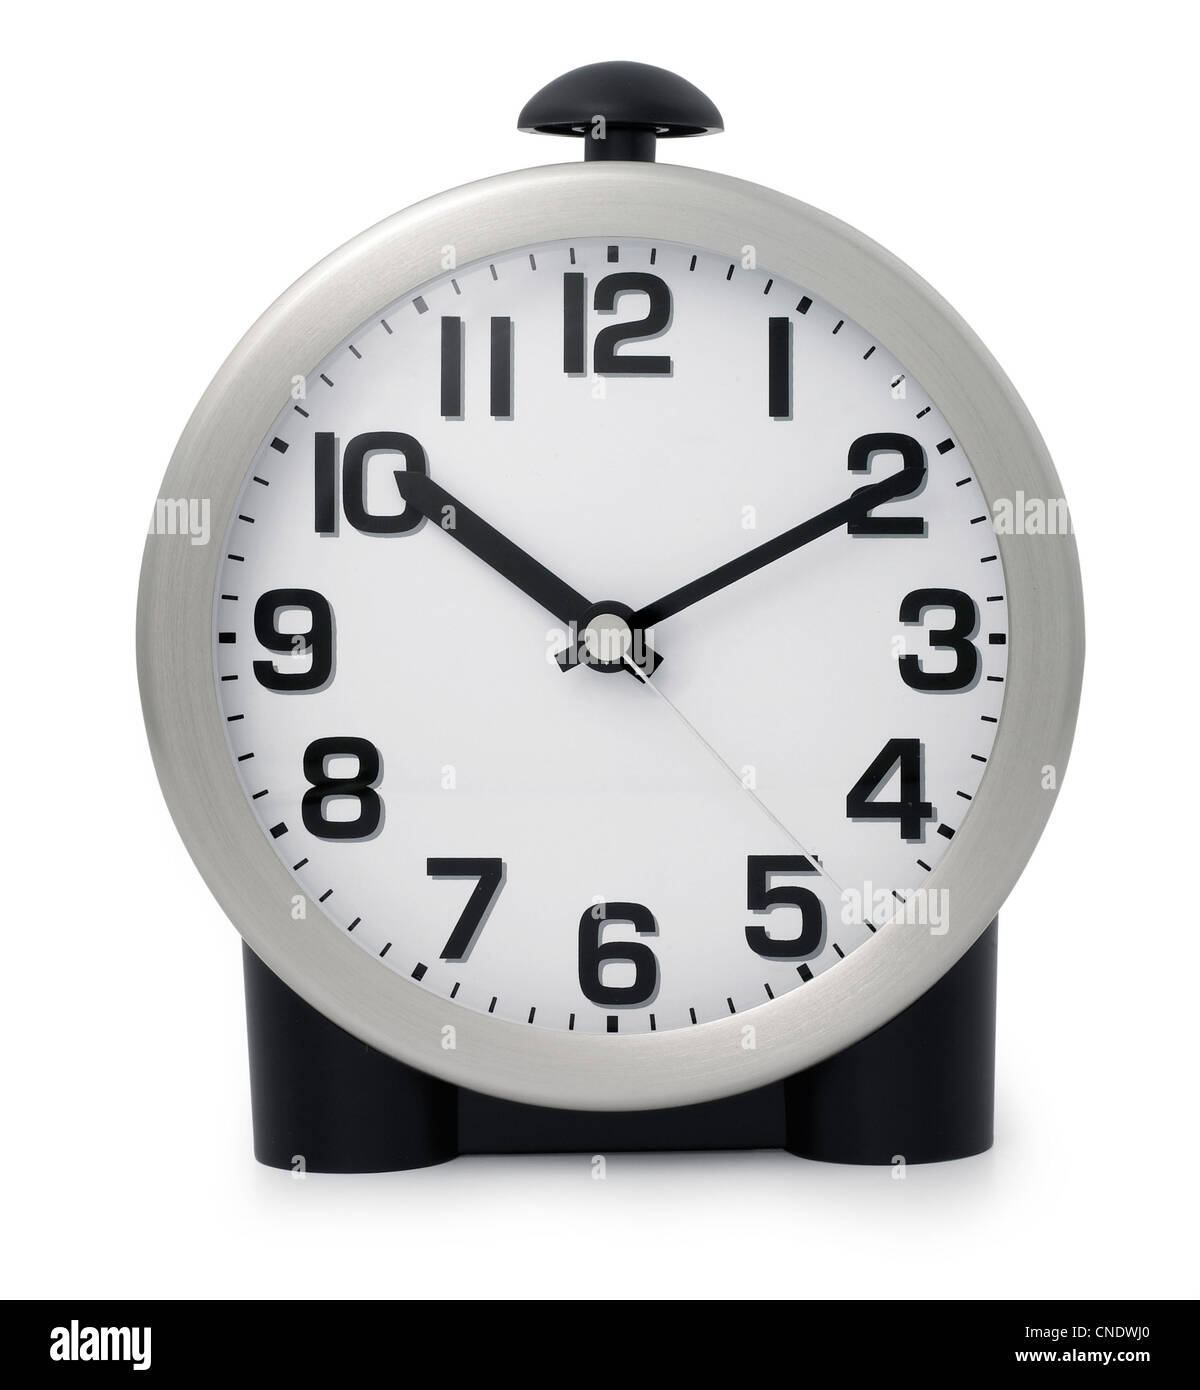 Black and white alarm clock Stock Photo